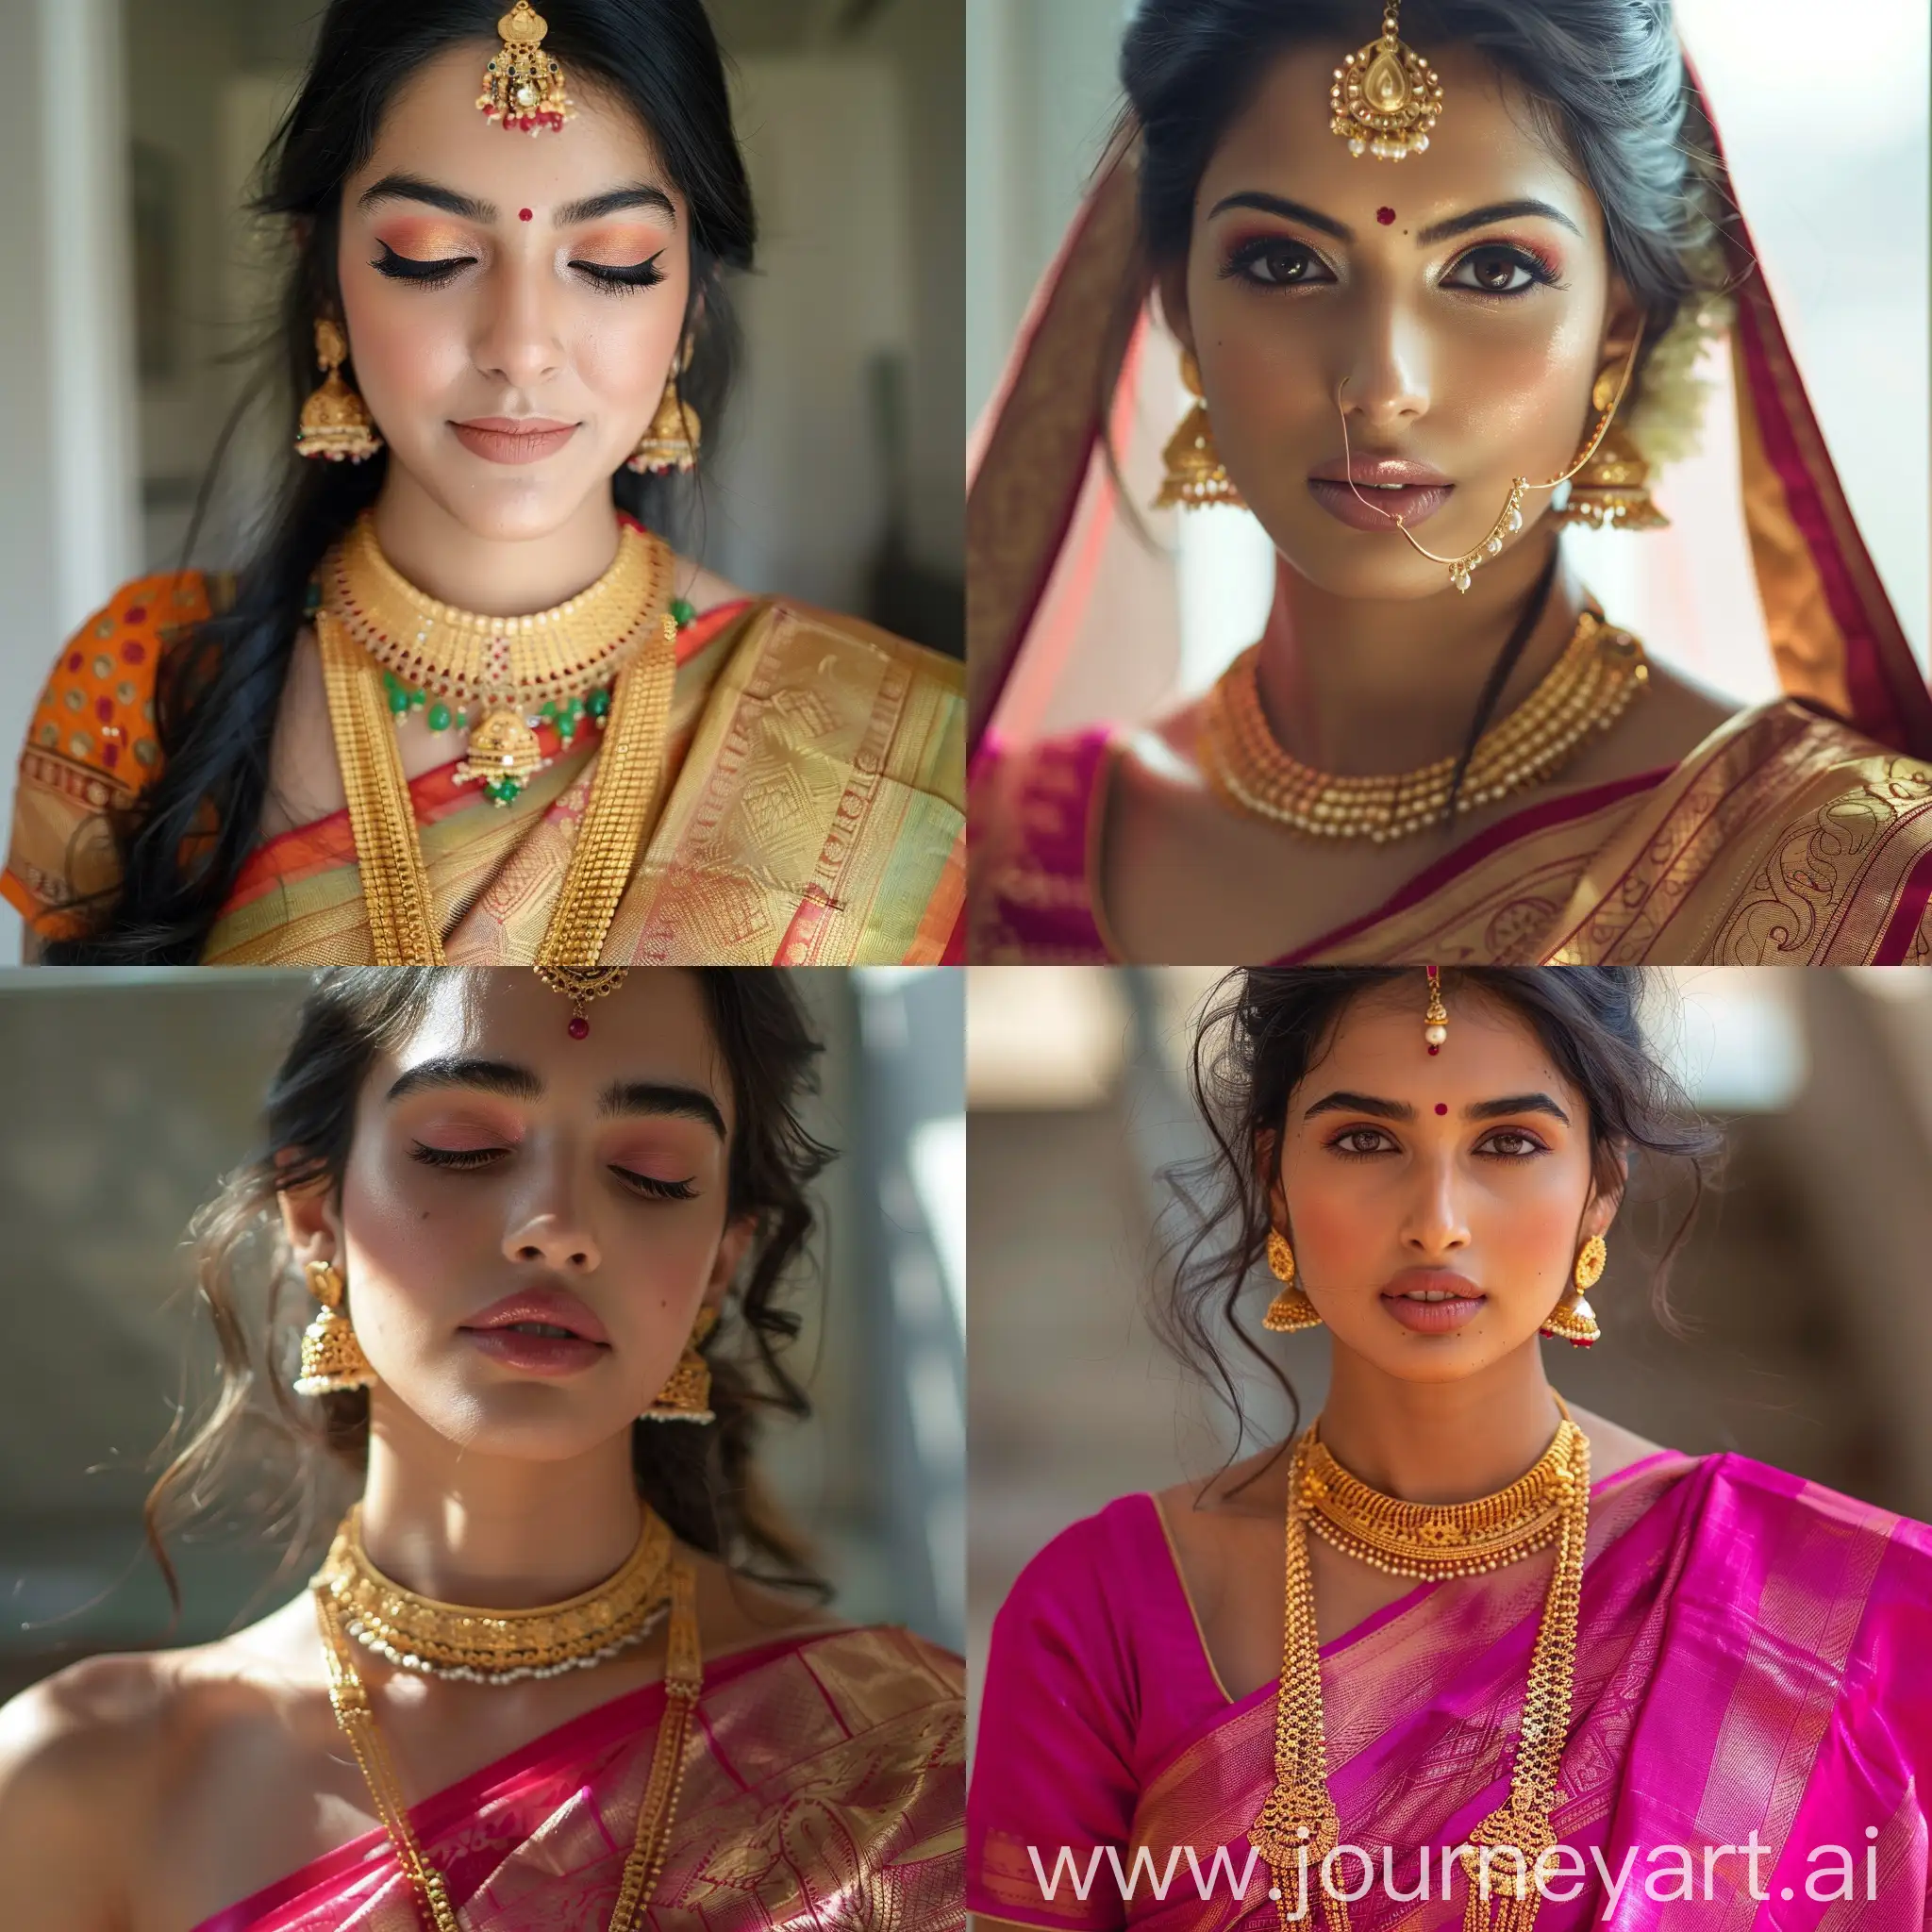 Traditional-Indian-Women-in-Saree-Captivating-Closeup-Look-with-Exquisite-Makeup